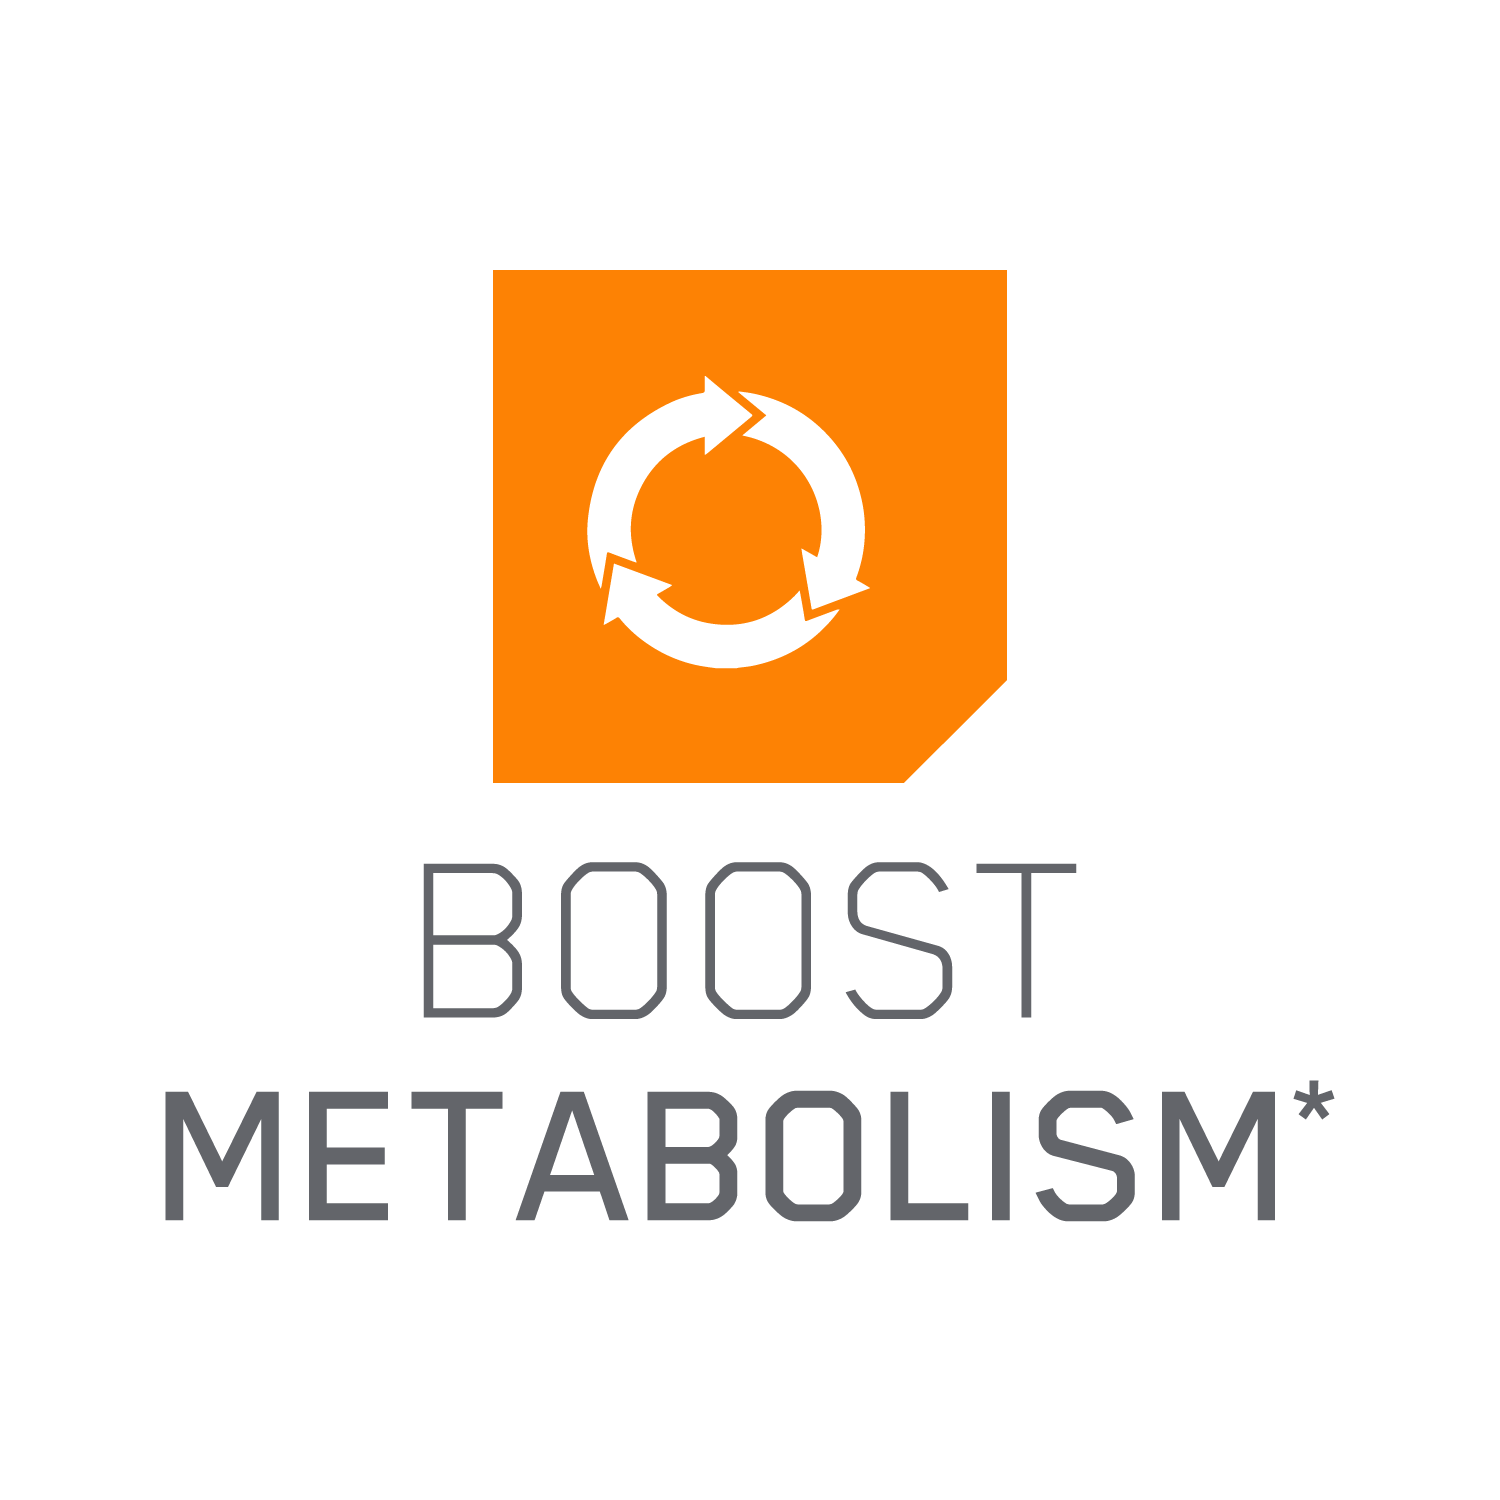 Boosts Metabolism